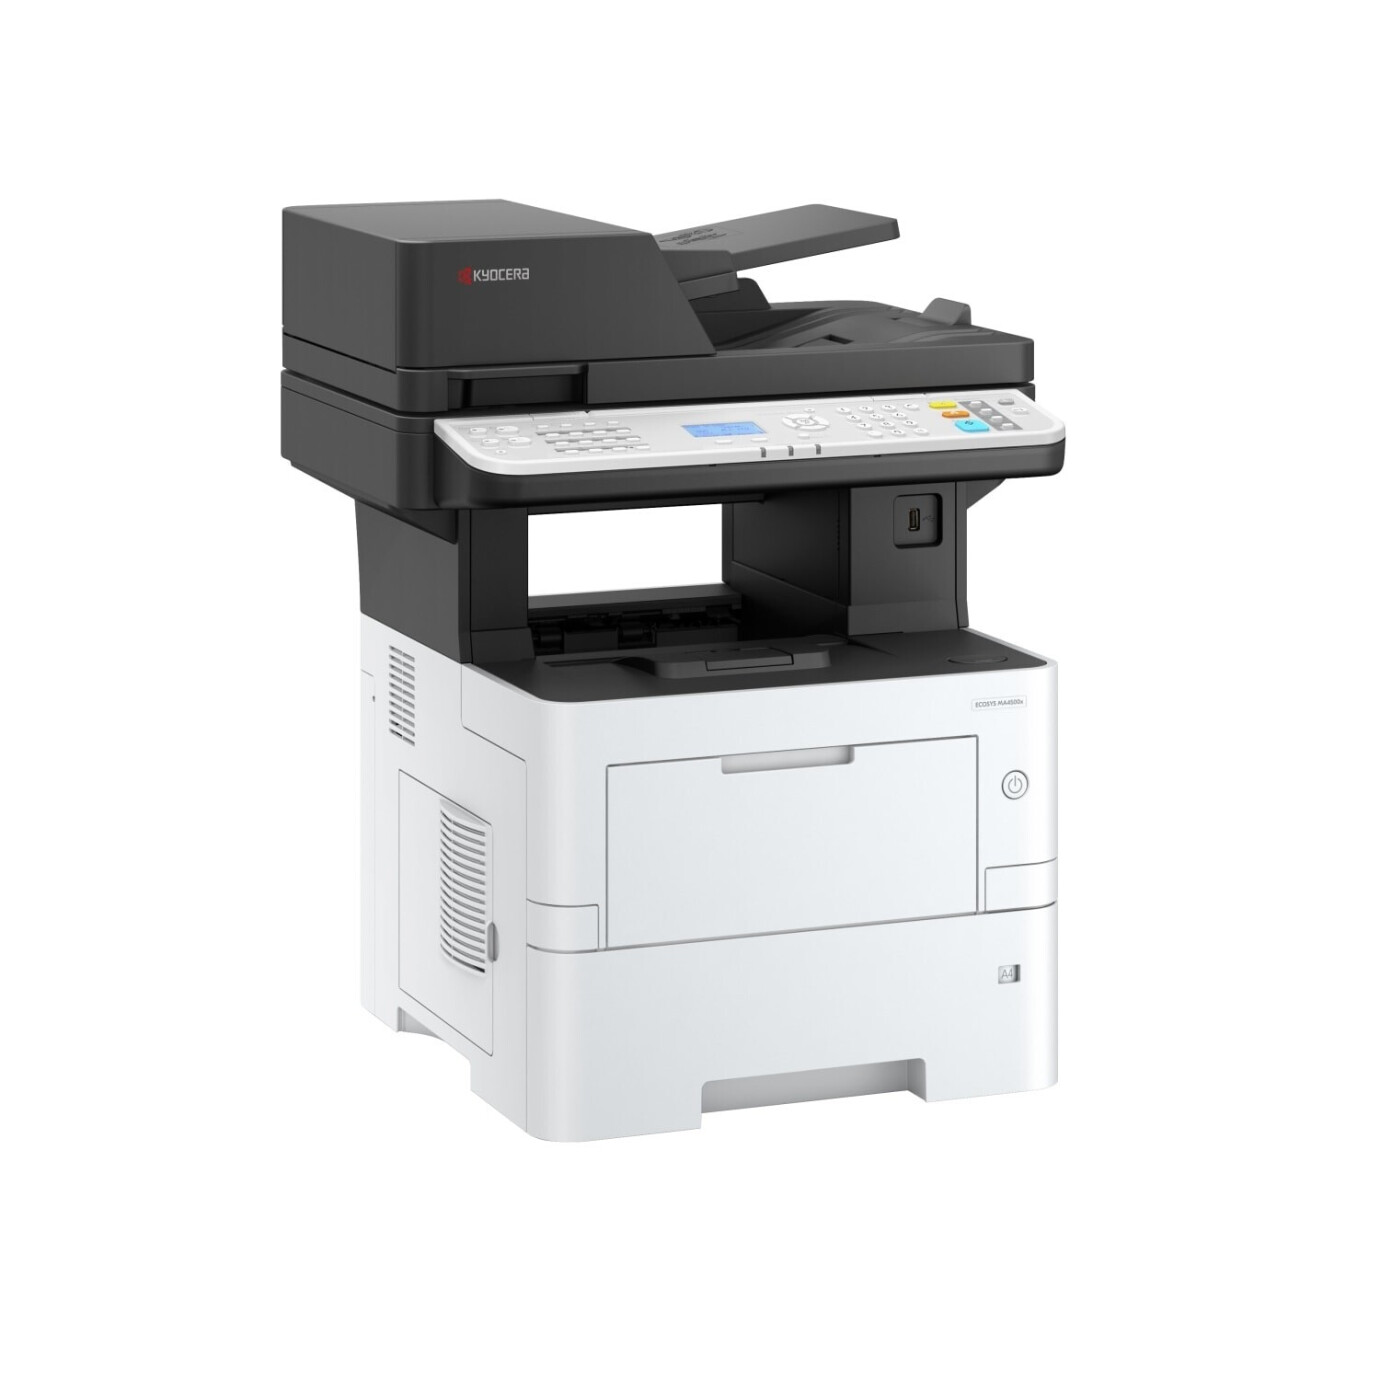 Vorschau: Kyocera ECOSYS MA4500x SW 3-in-1-Laserdrucker